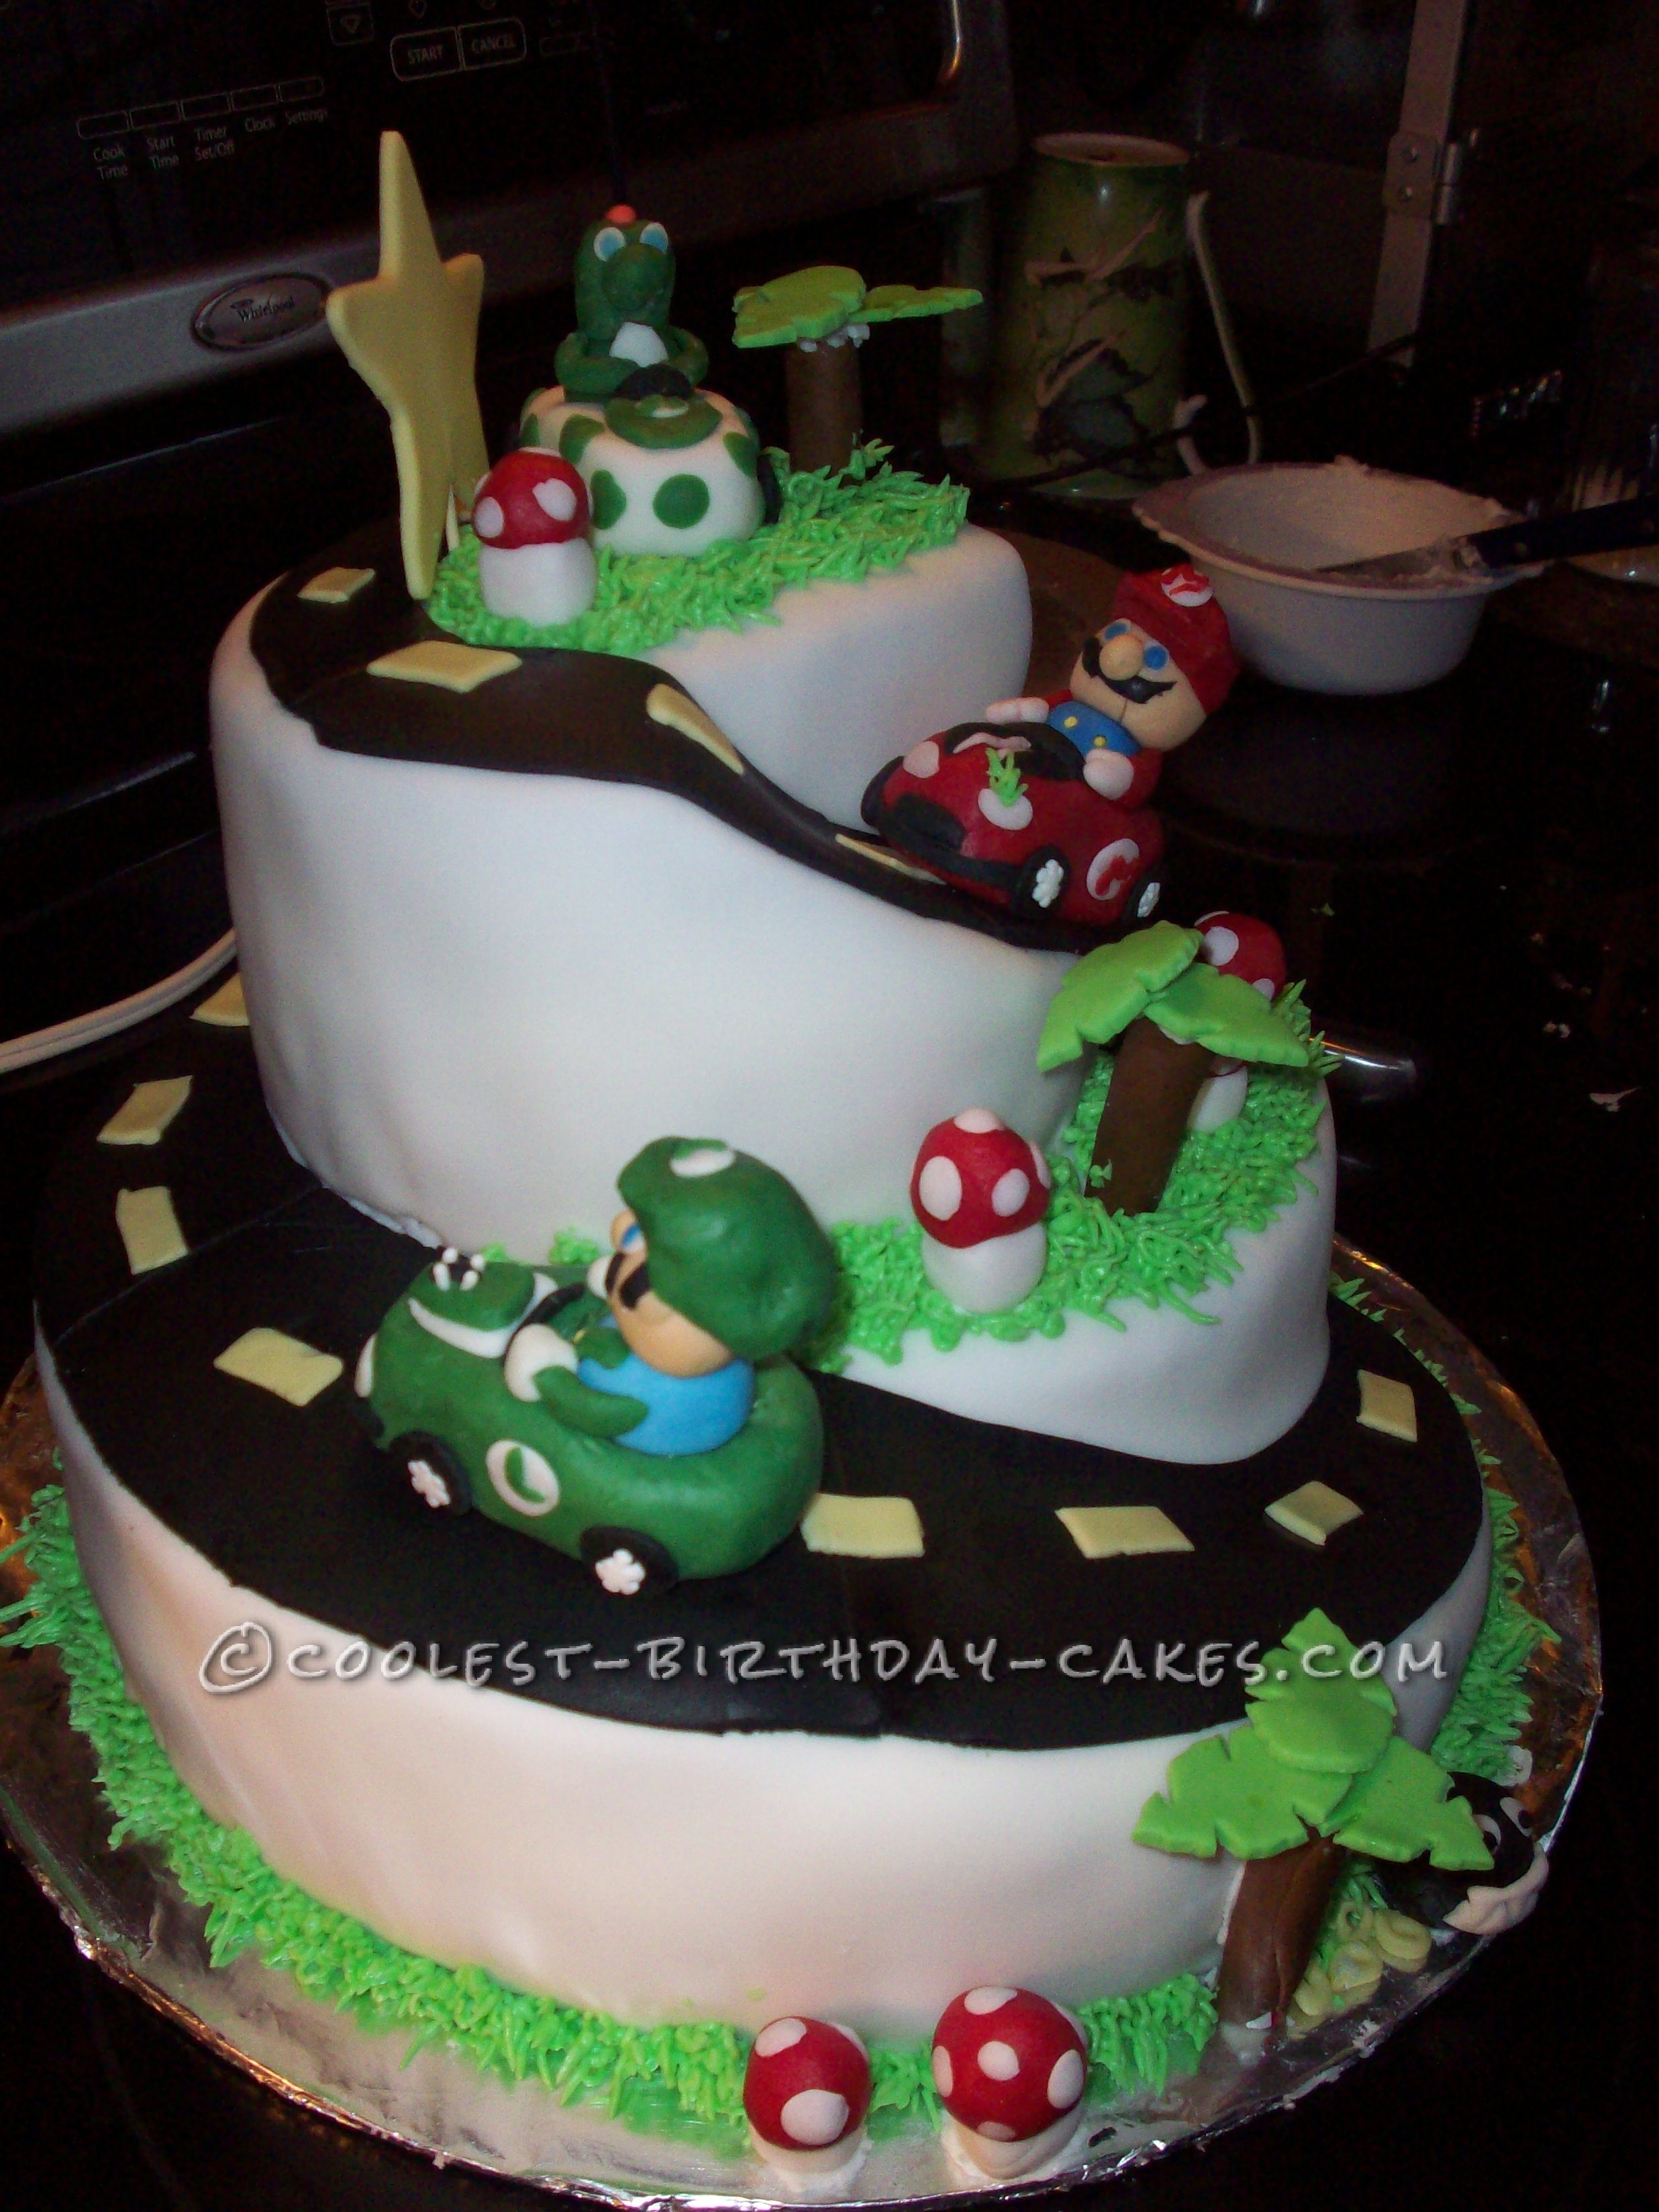 Coolest Mario Kart Cake